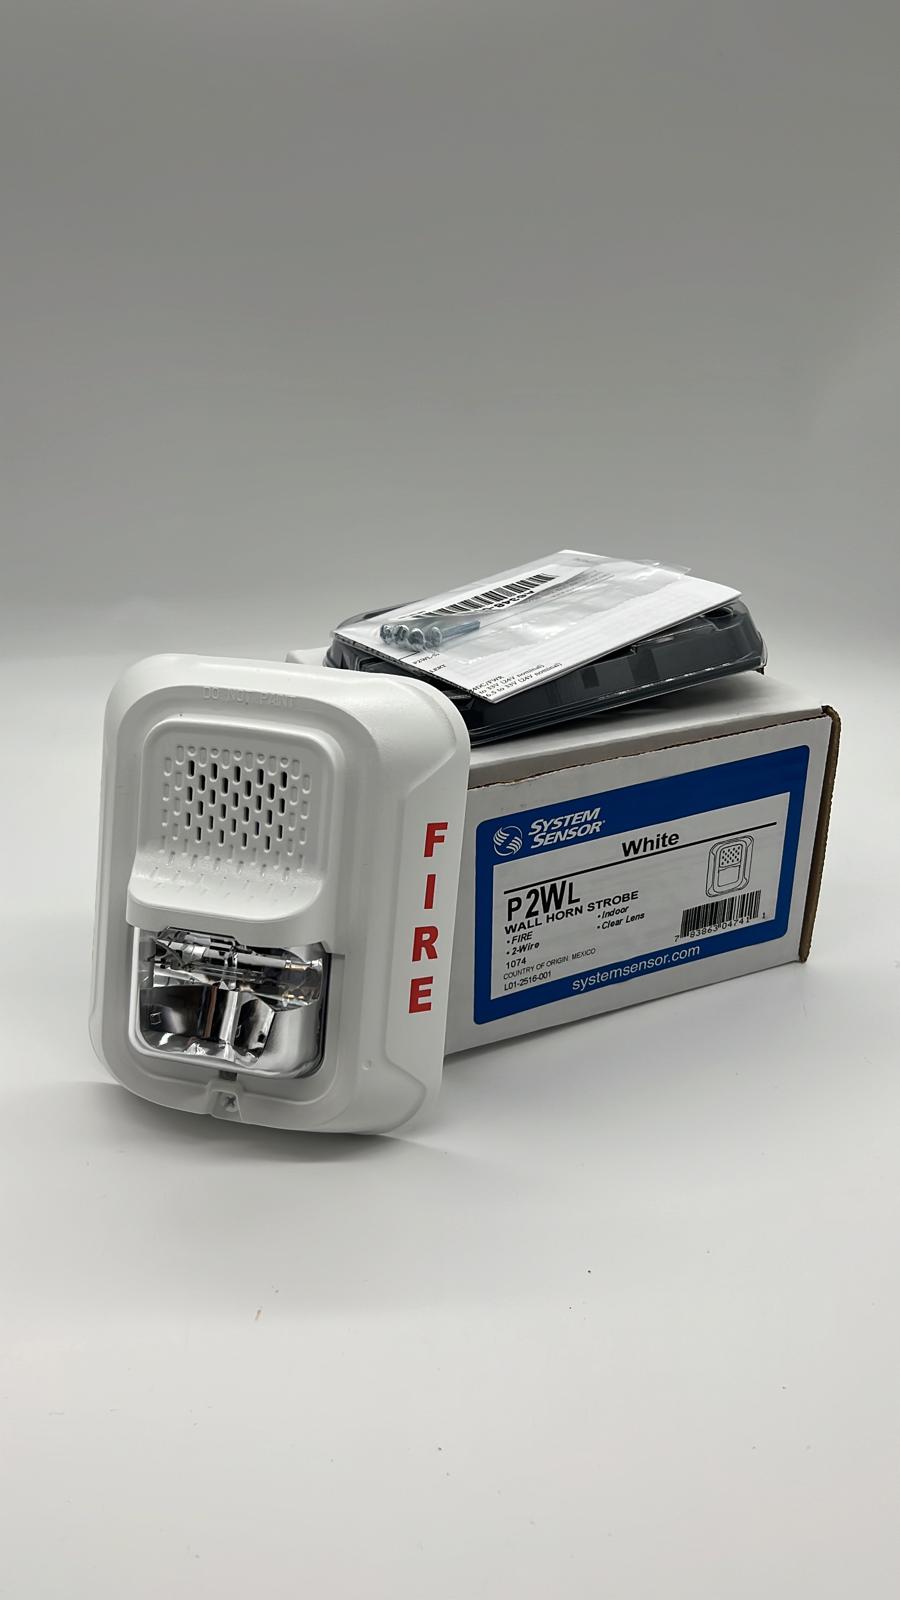 System Sensor P2WL - The Fire Alarm Supplier